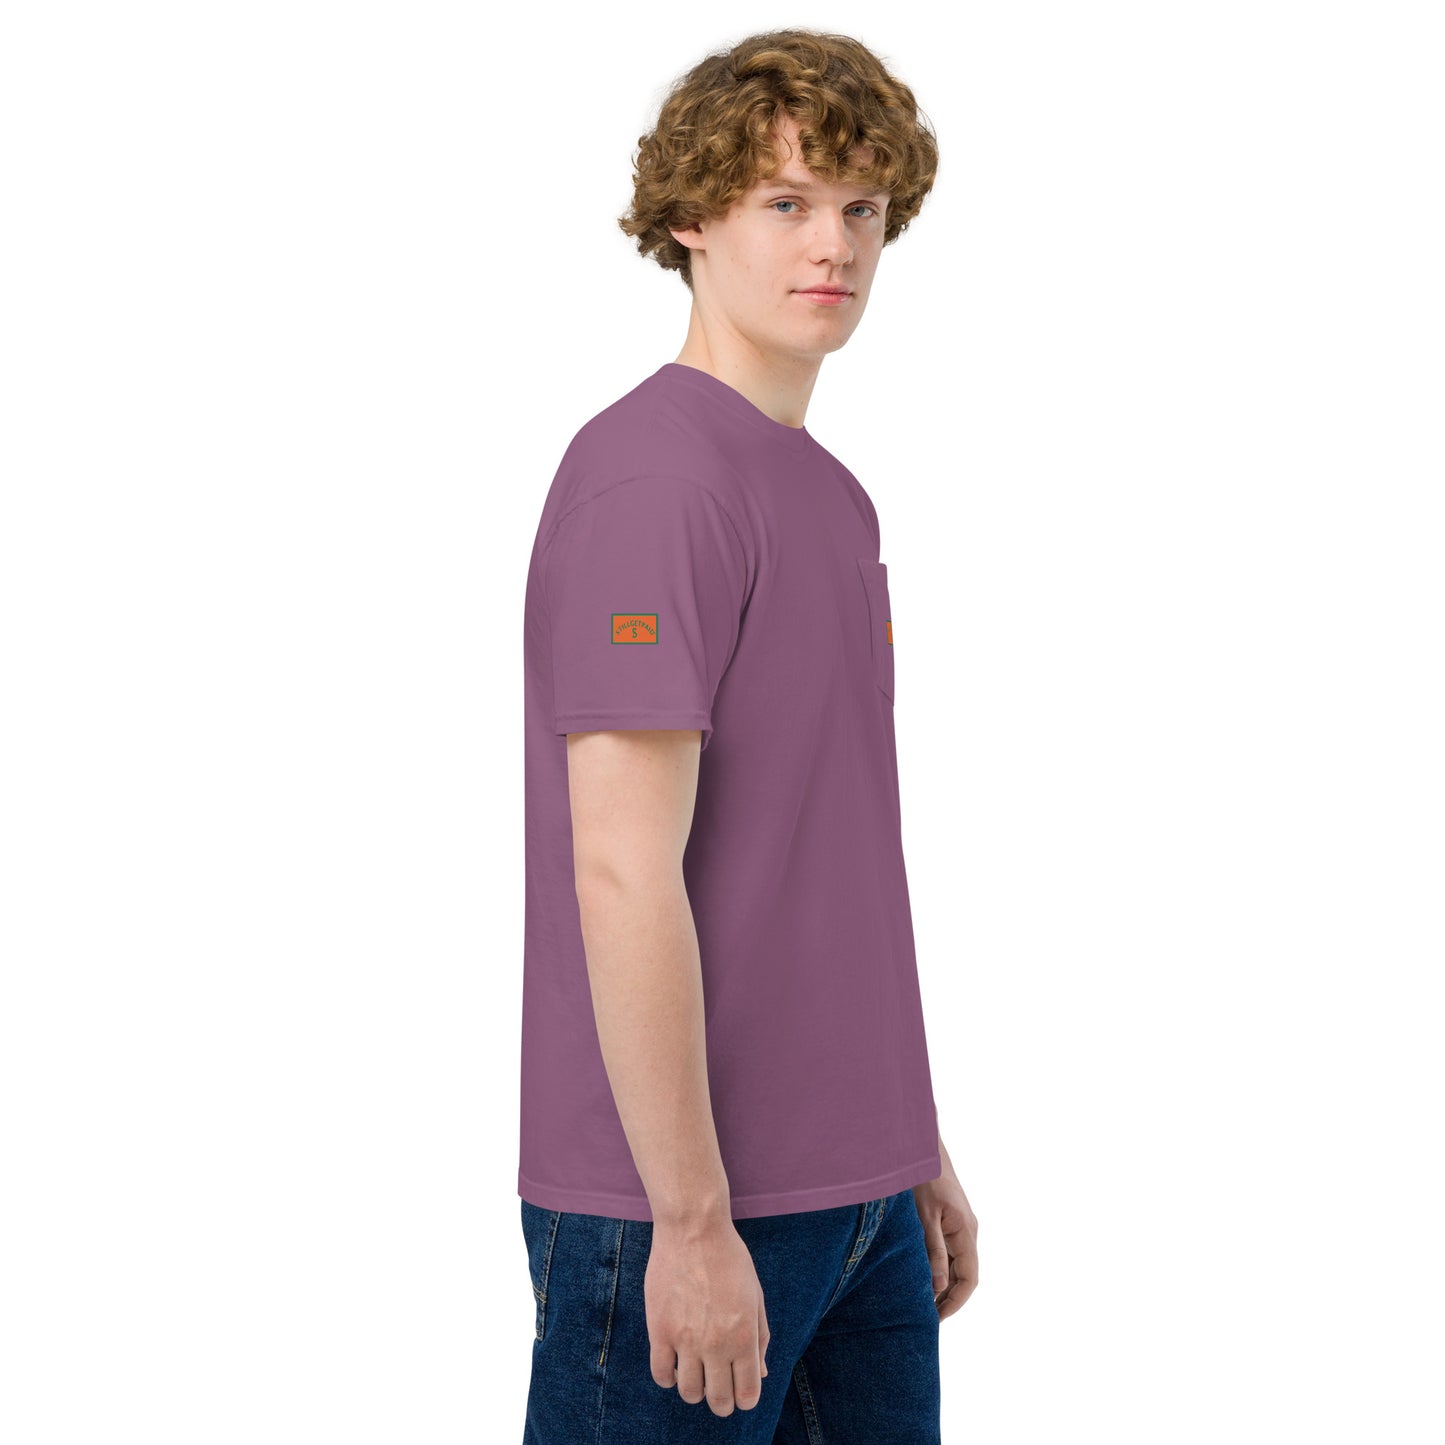 STILLGETPAID® APPAREL Unisex garment-dyed pocket t-shirt